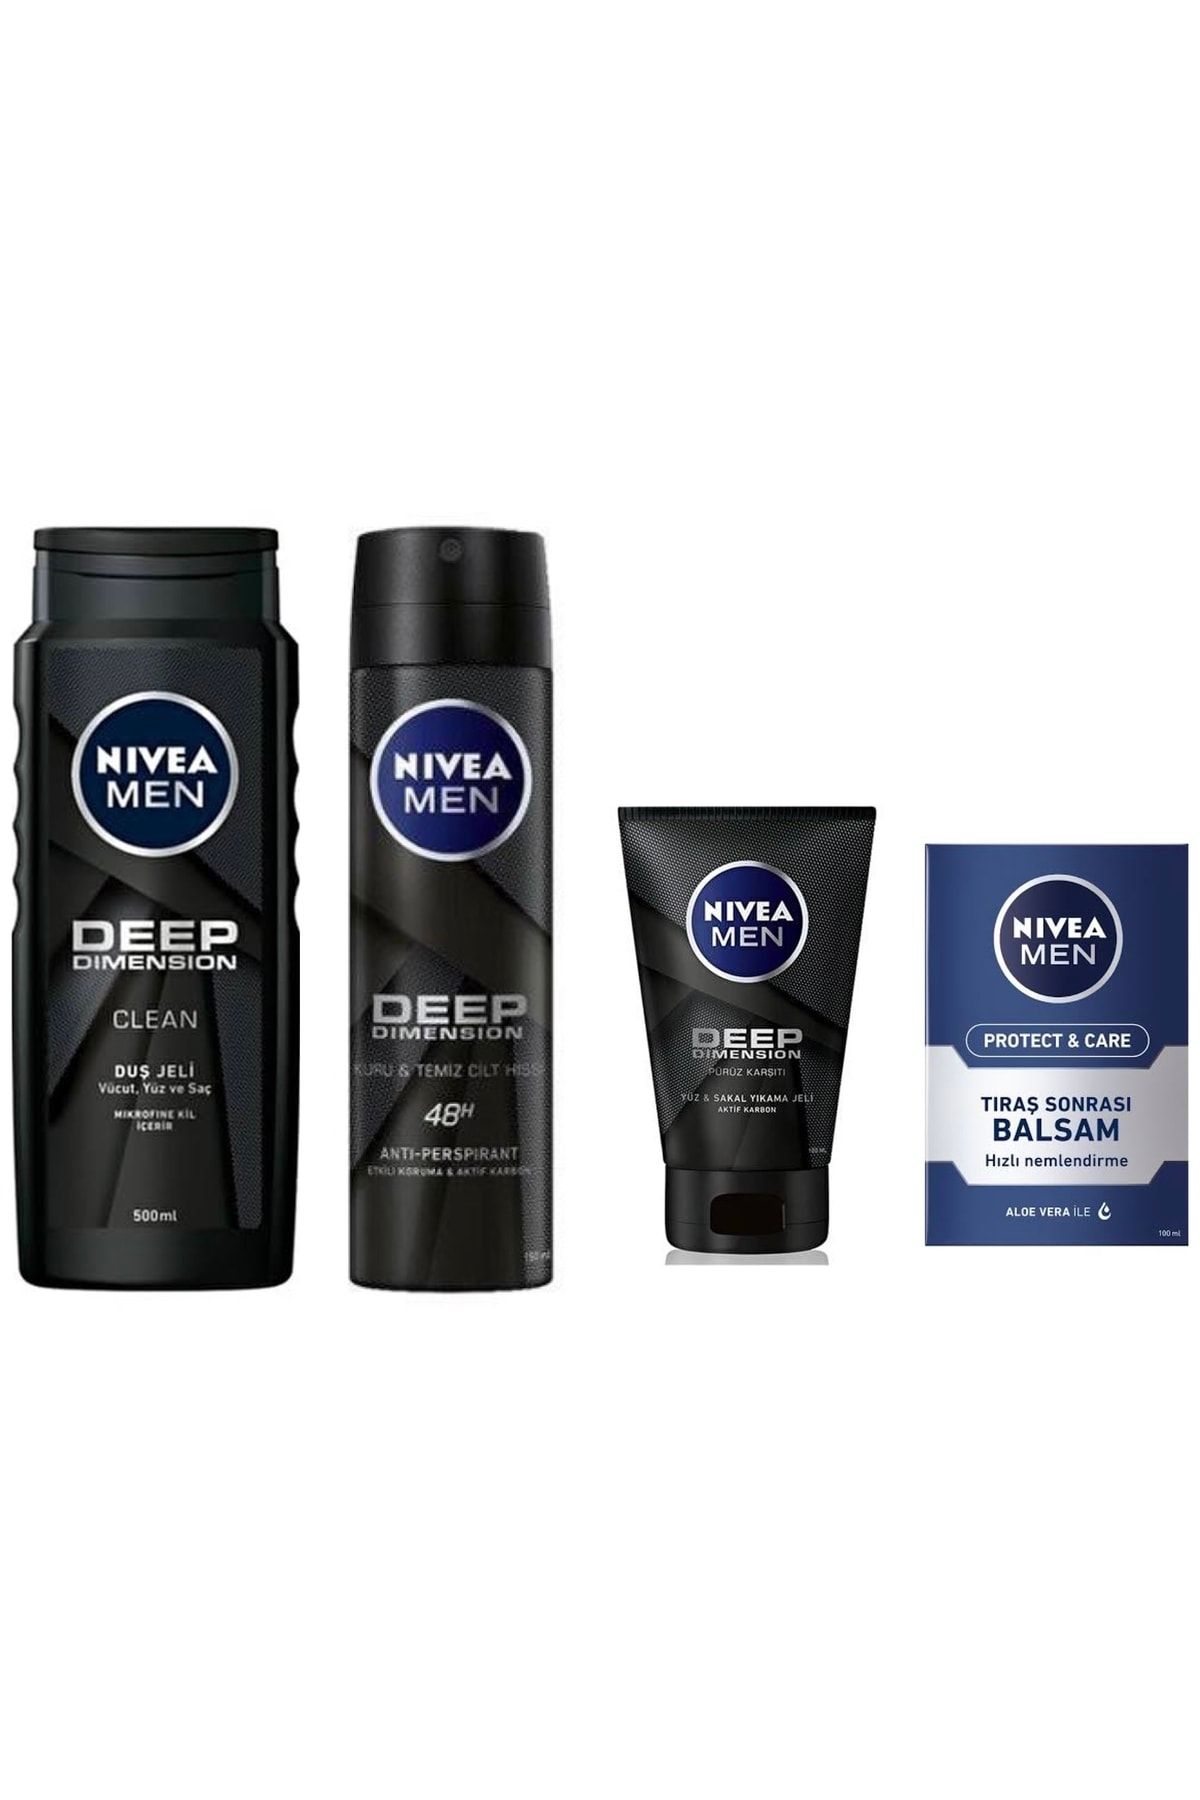 NIVEA مجموعه مراقبت پوست مردانه با ژل حمام عمیق بعد از اصلاح دئودورانت ژل شستشوی صورت بالسام